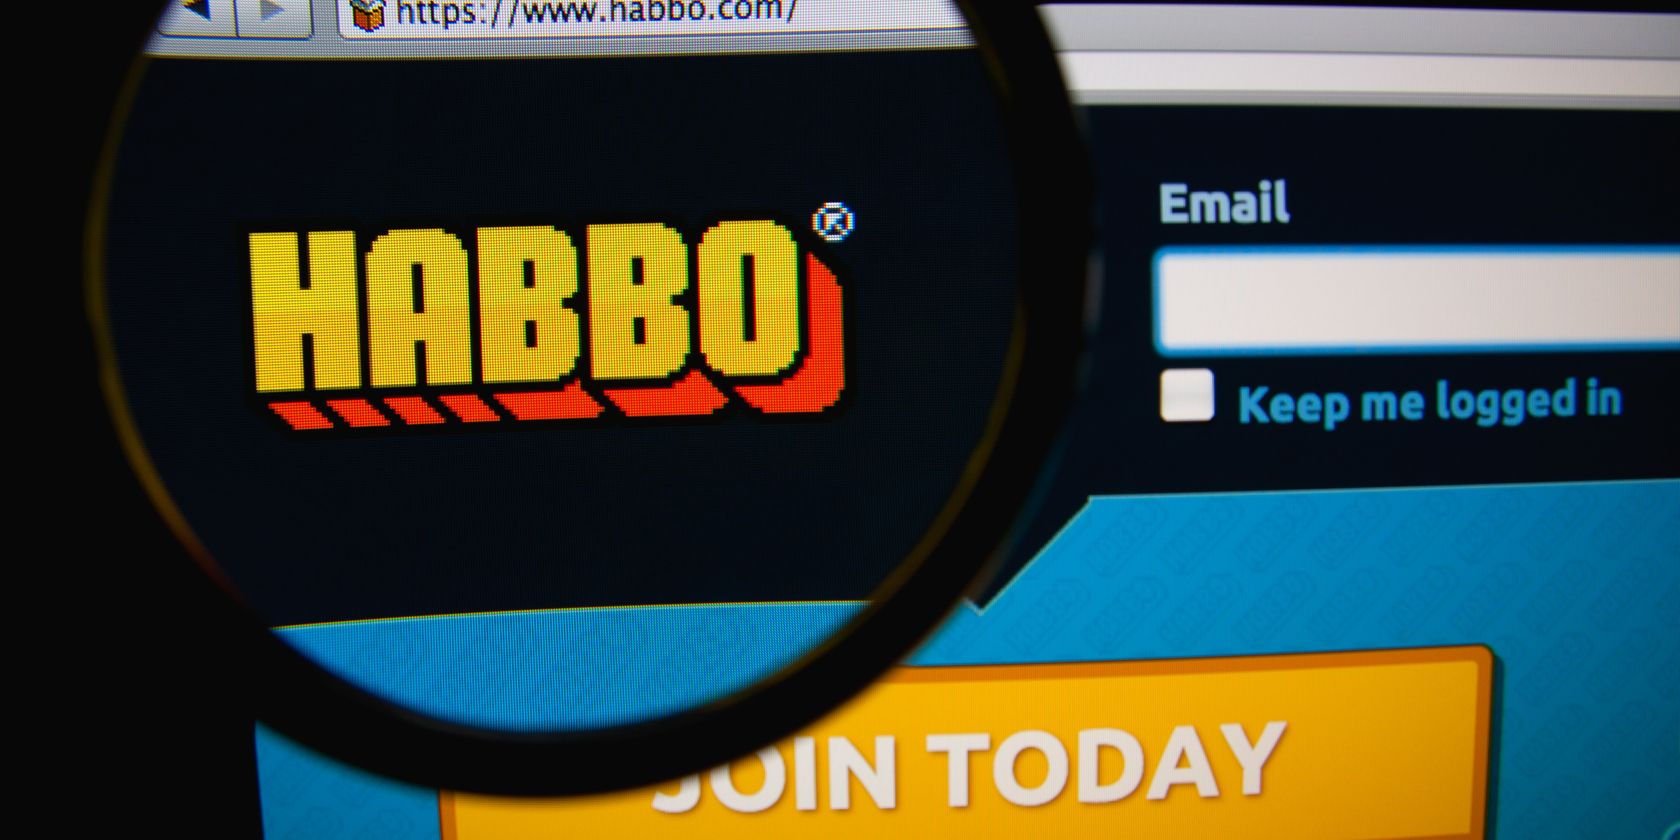 habbo logo on screen